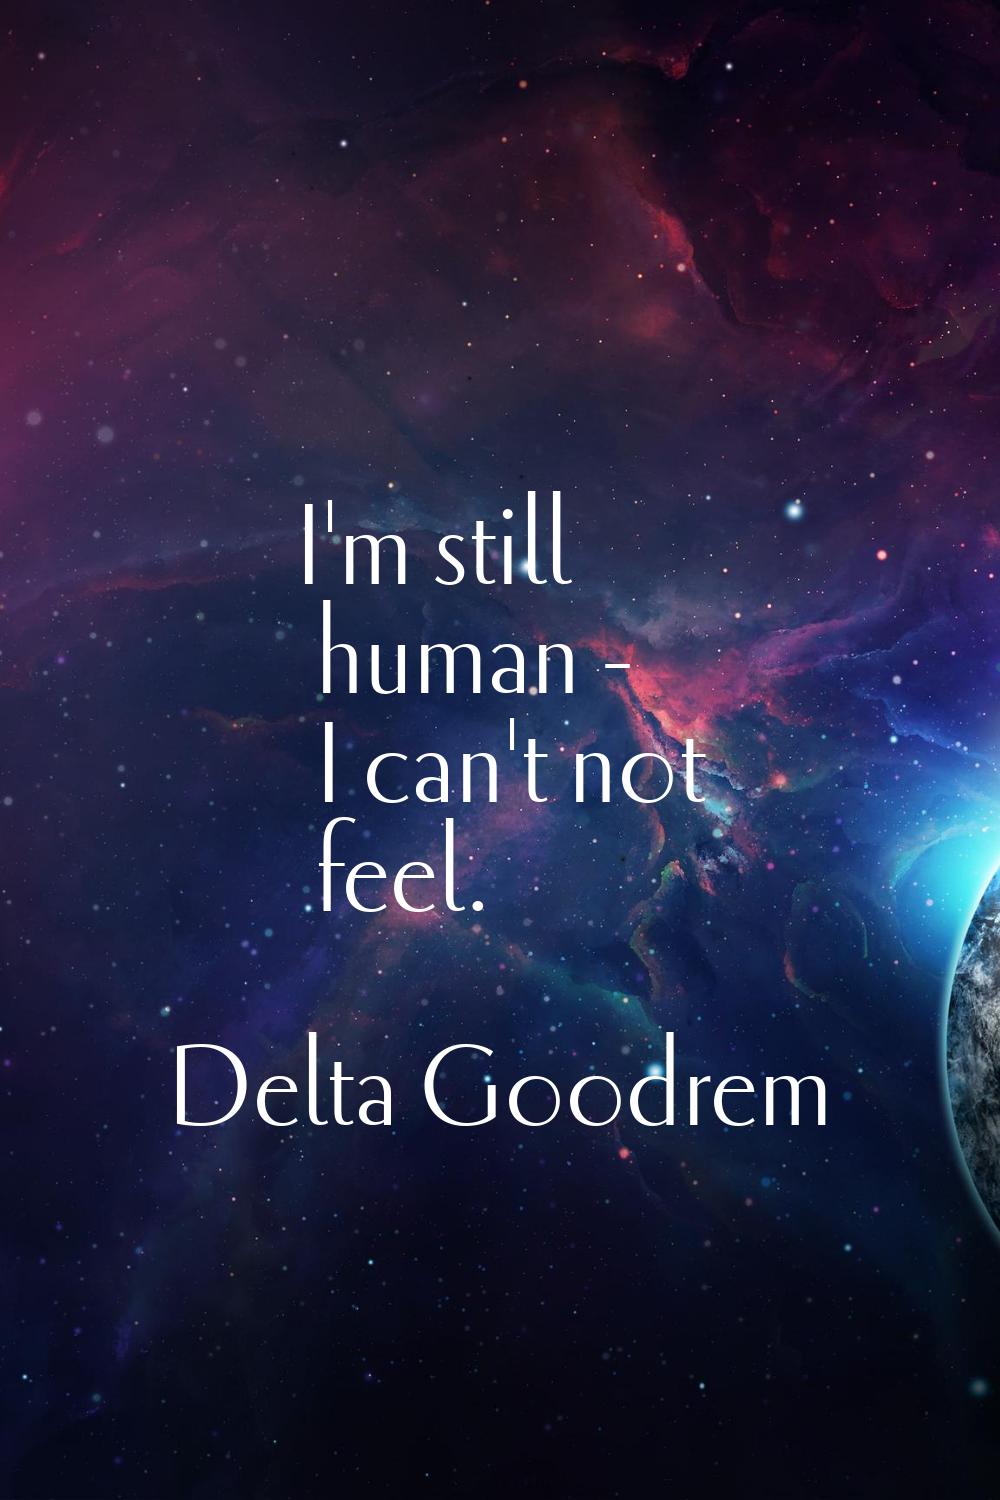 I'm still human - I can't not feel.